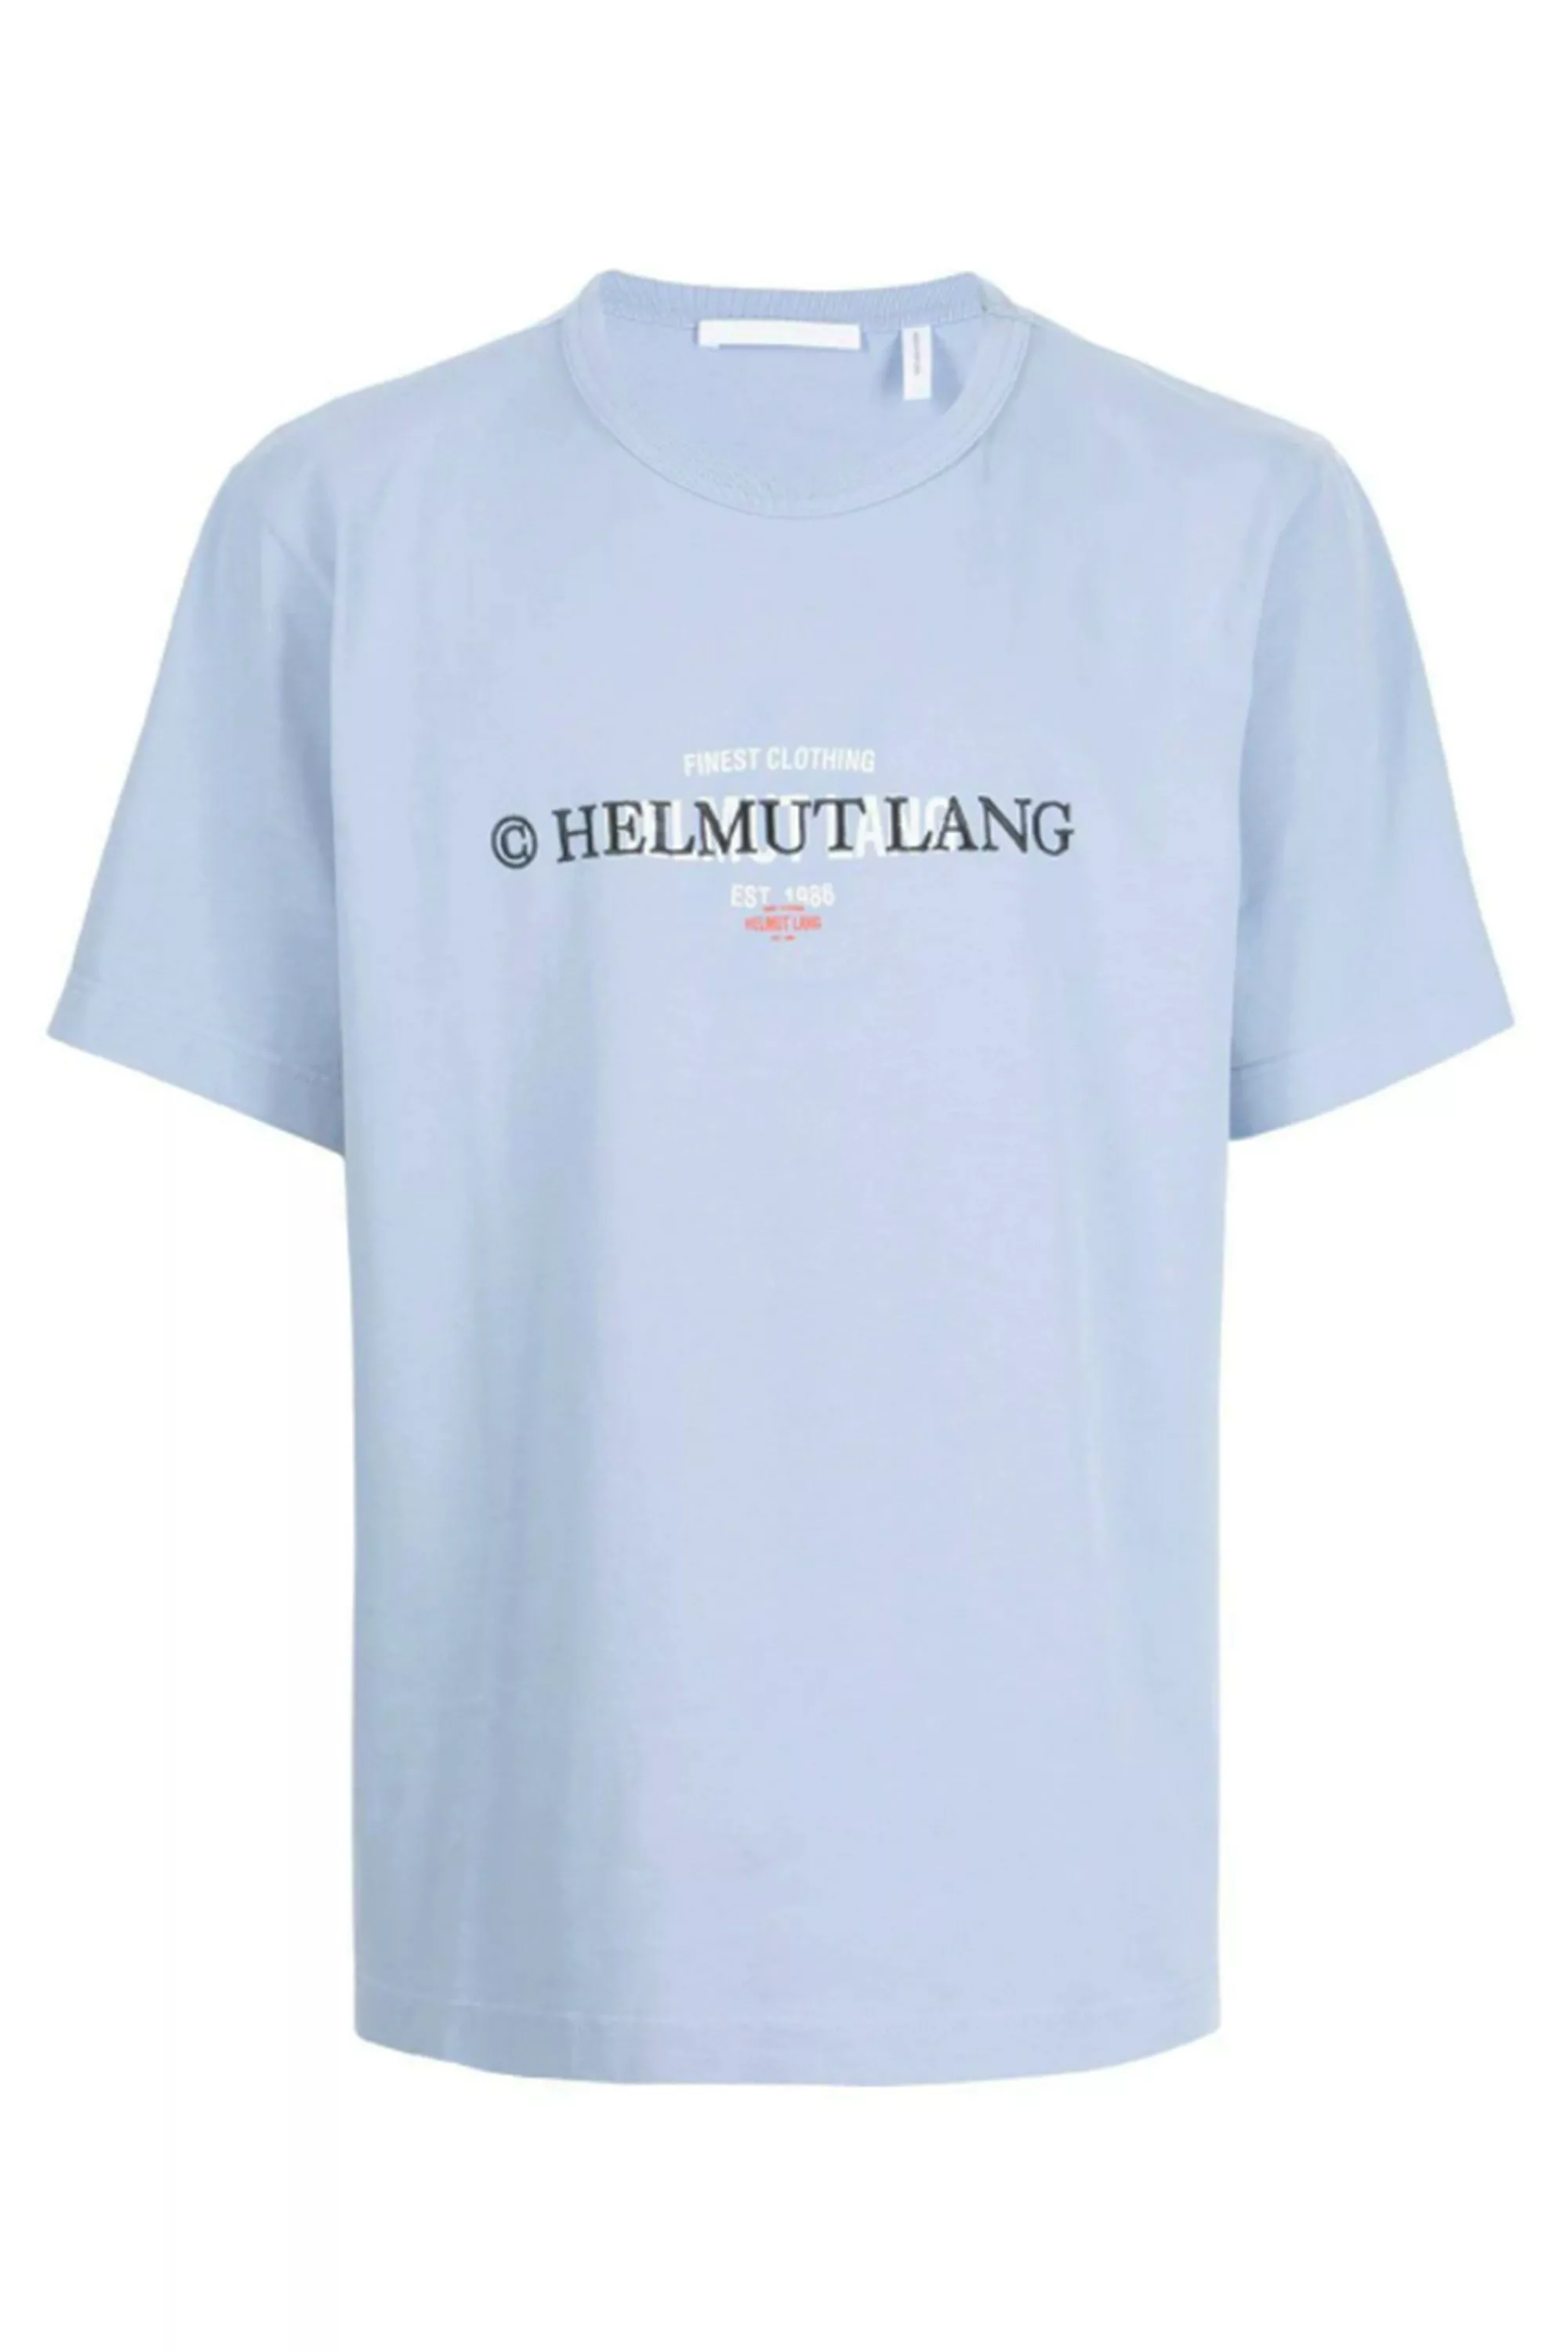 HELMUT LANG T-Shirt Unisex Celeste günstig online kaufen